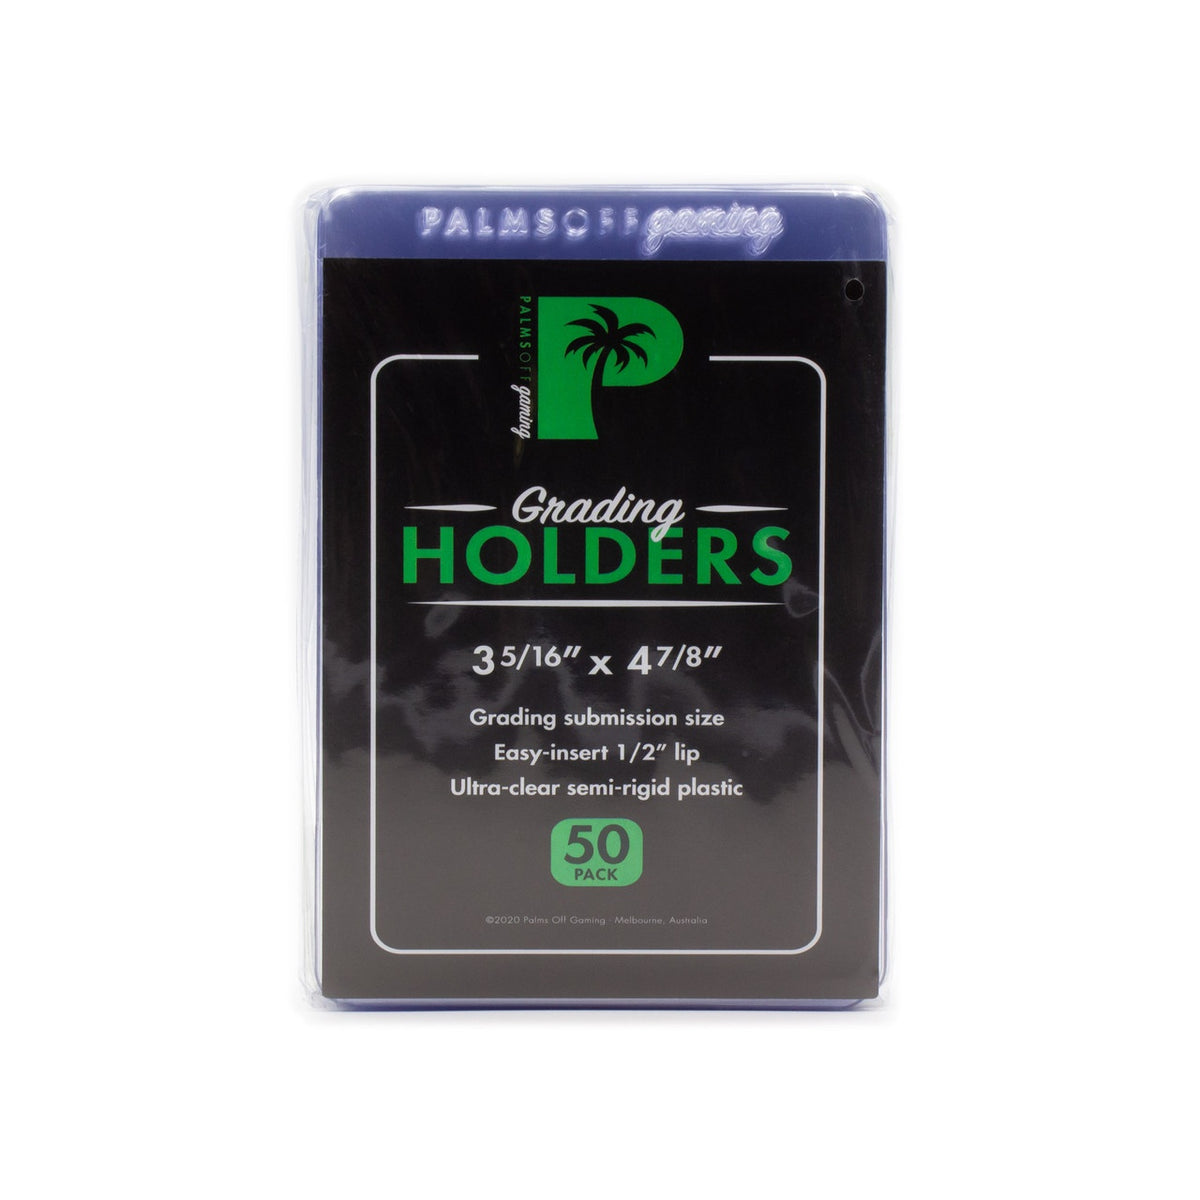 Palms Off Gaming - Grading Holders Semi Rigid - 50 Pack